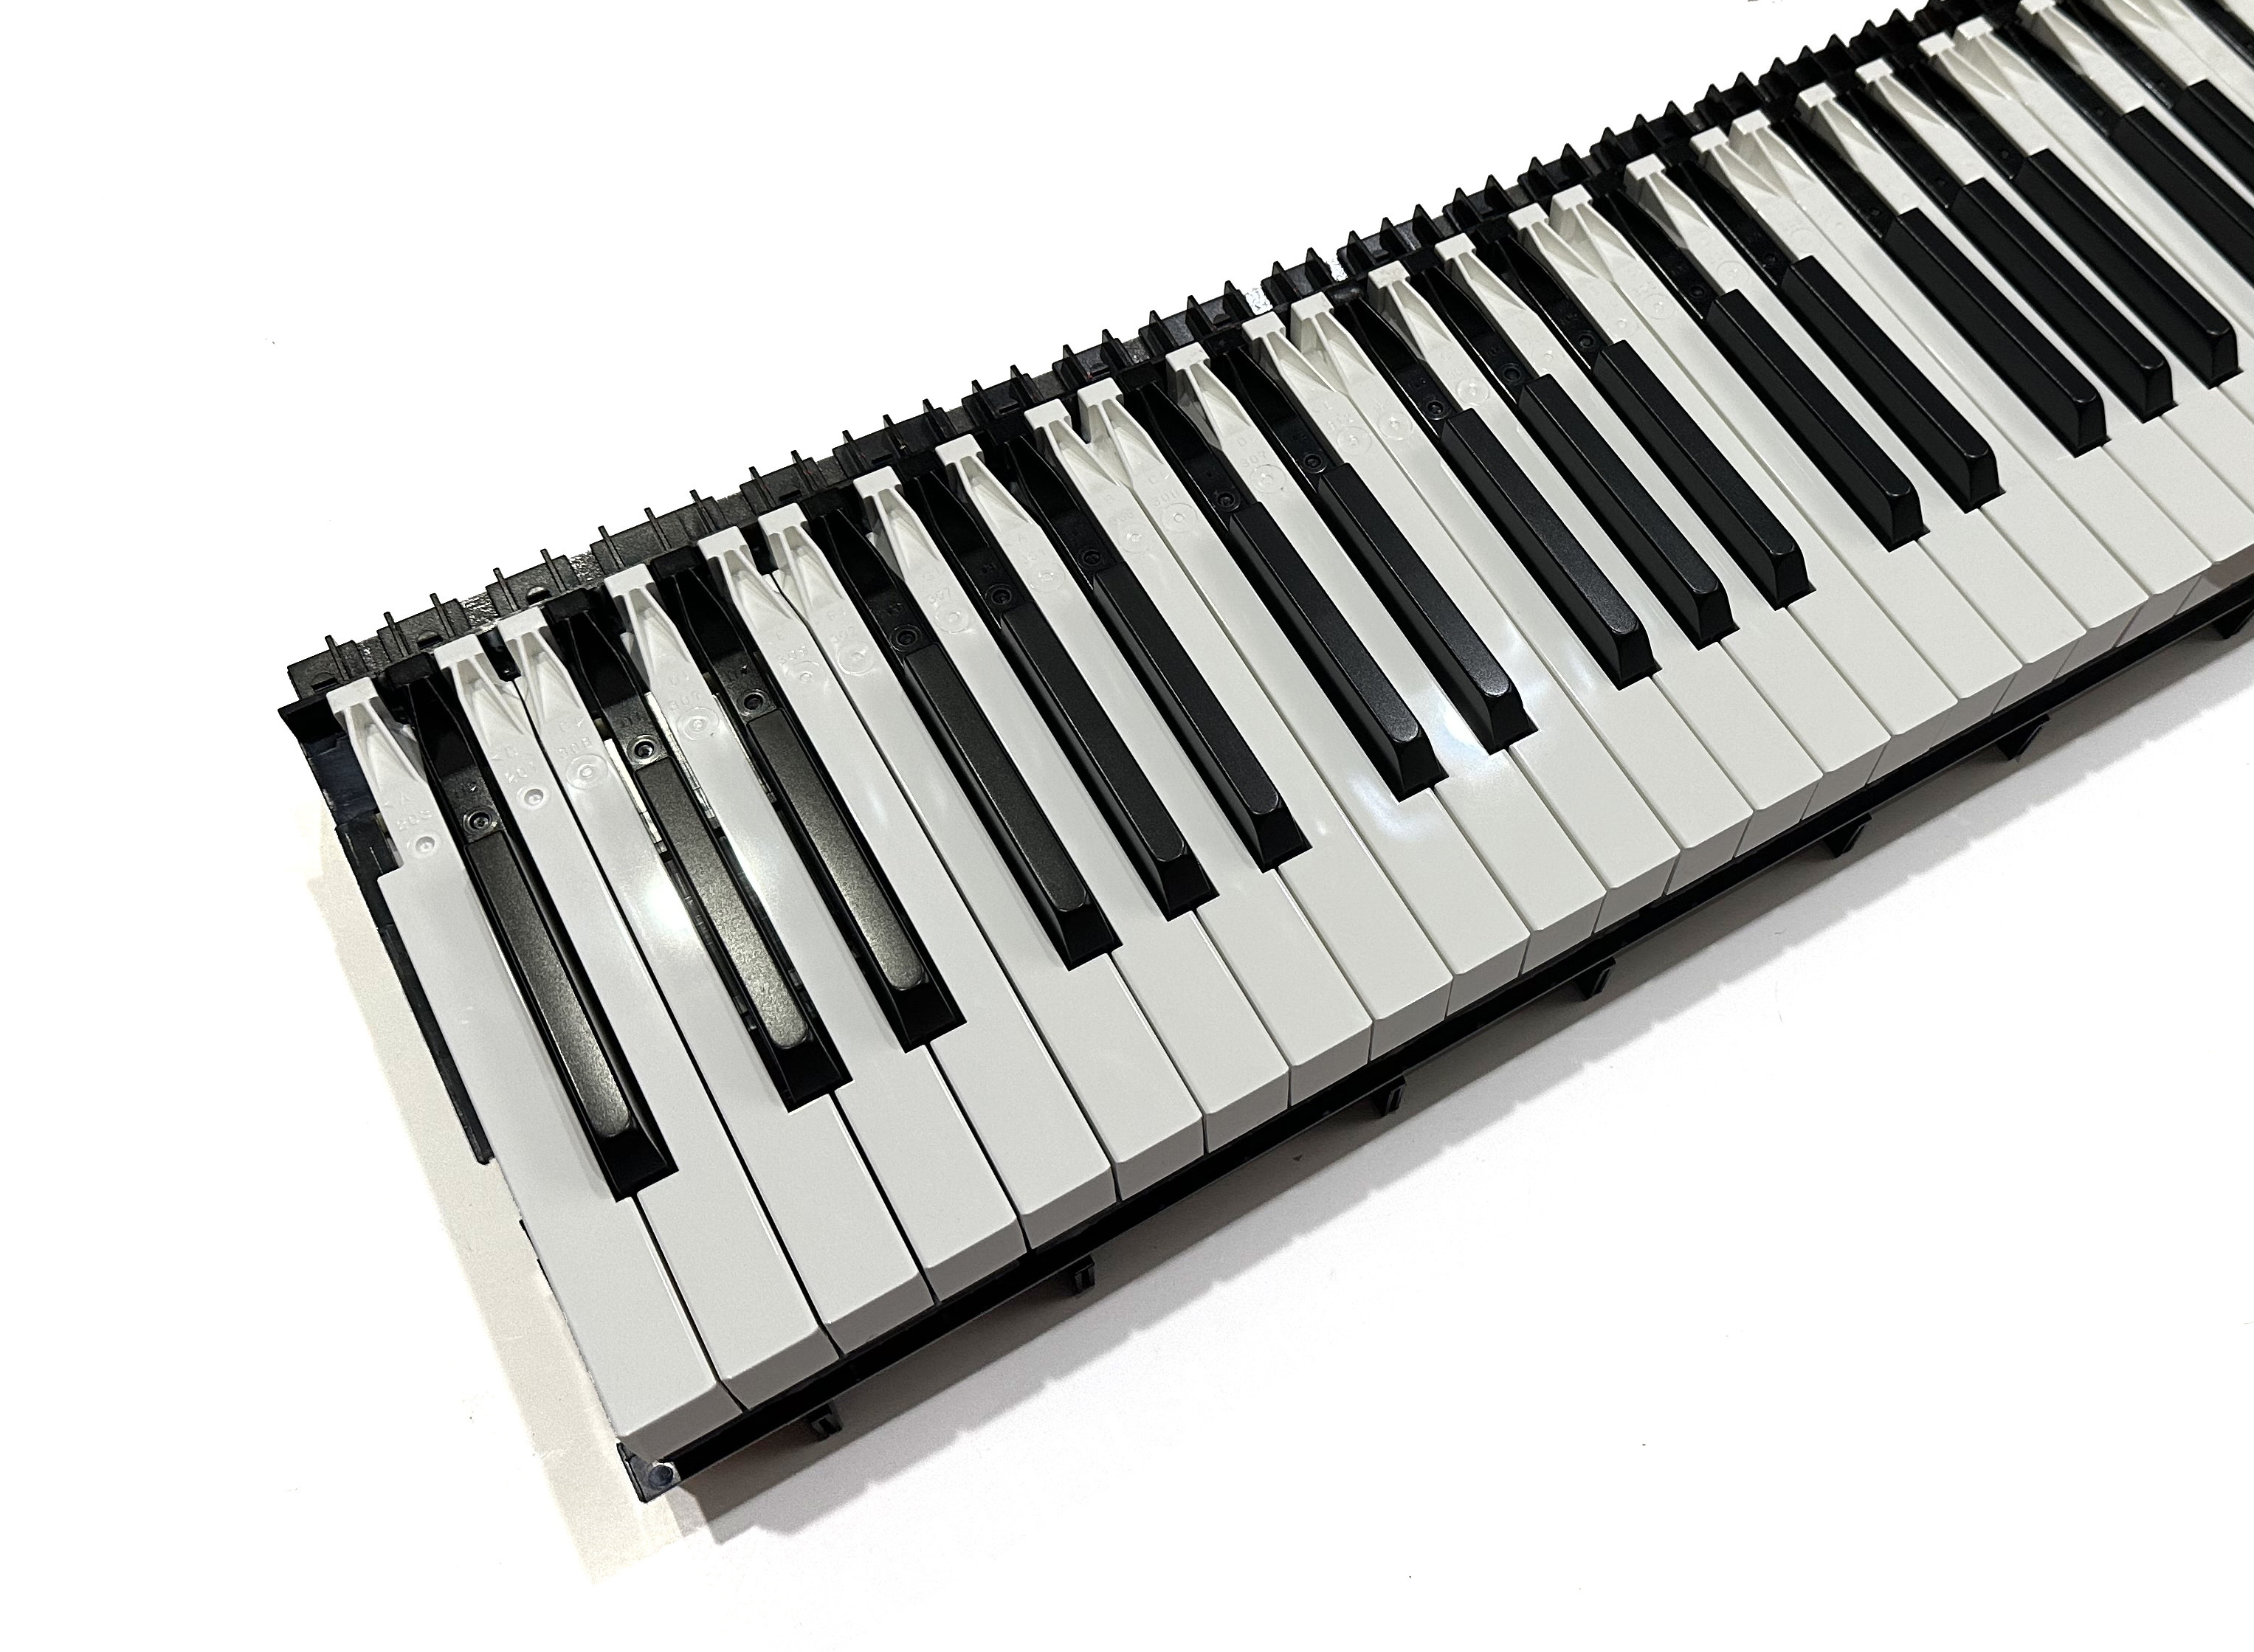 Keybed assembly, 88-note, Yamaha